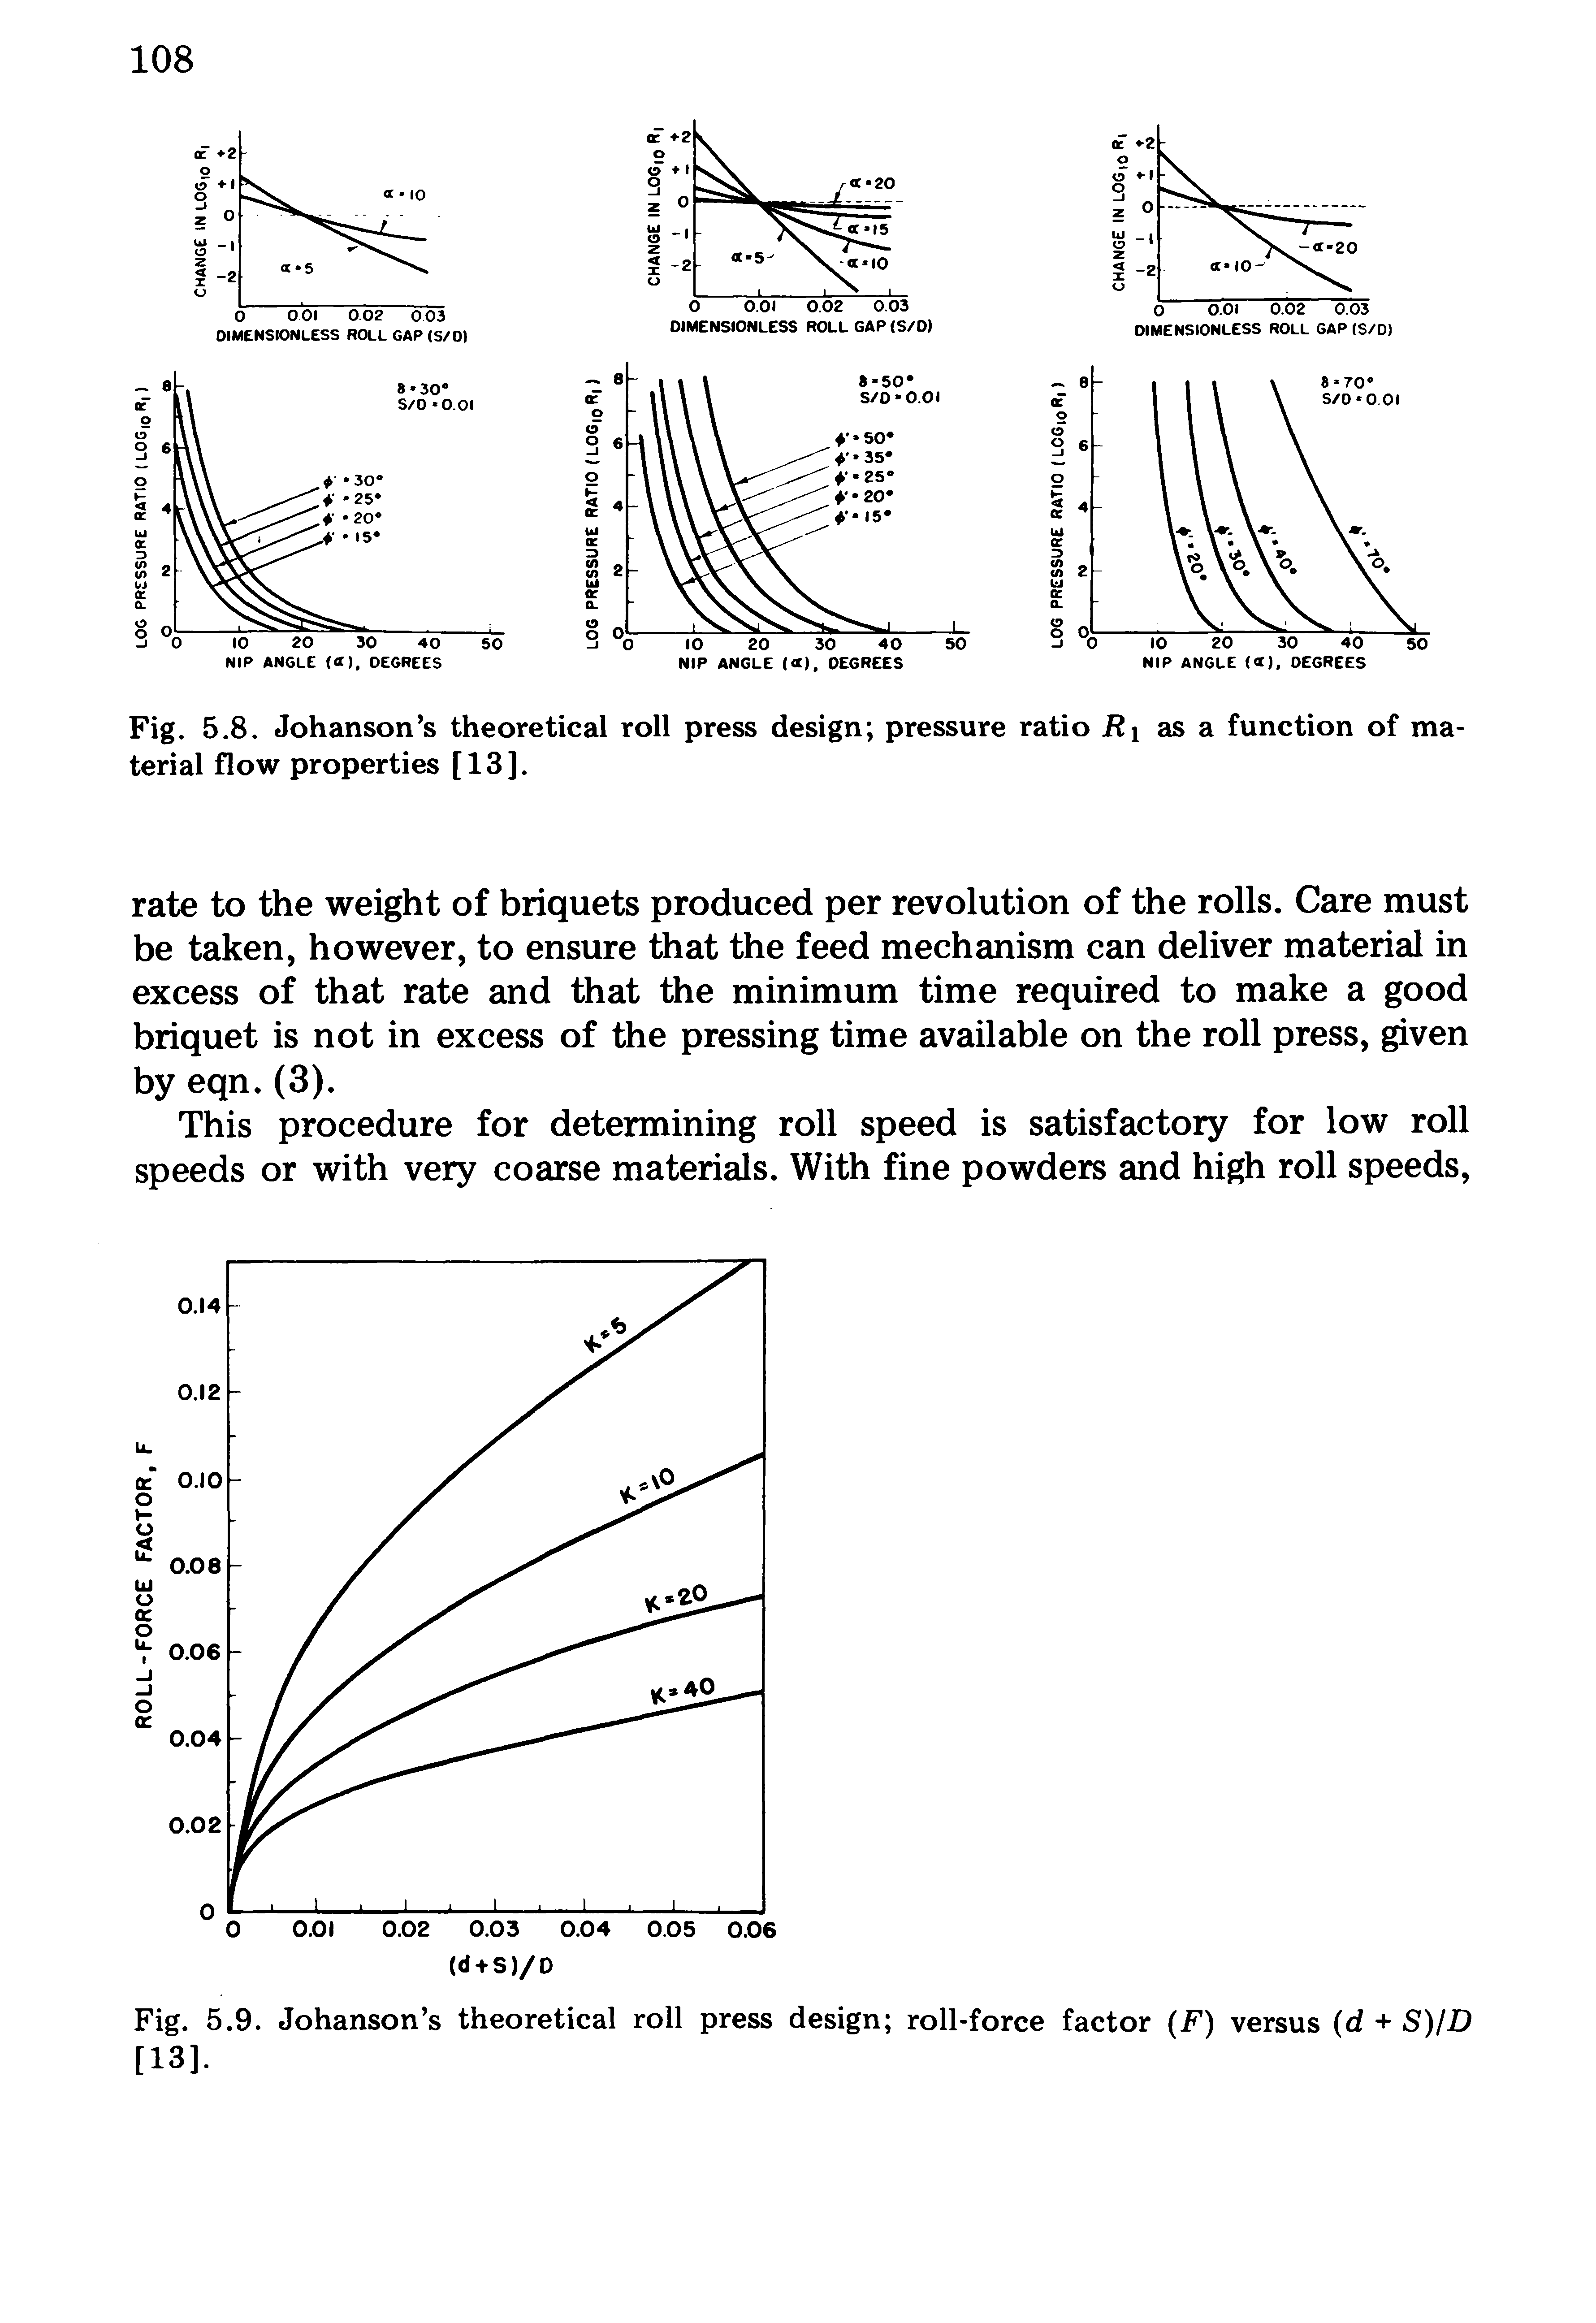 Fig. 5.9. Johanson s theoretical roll press design roll-force factor (F) versus (d + S)/D [13].